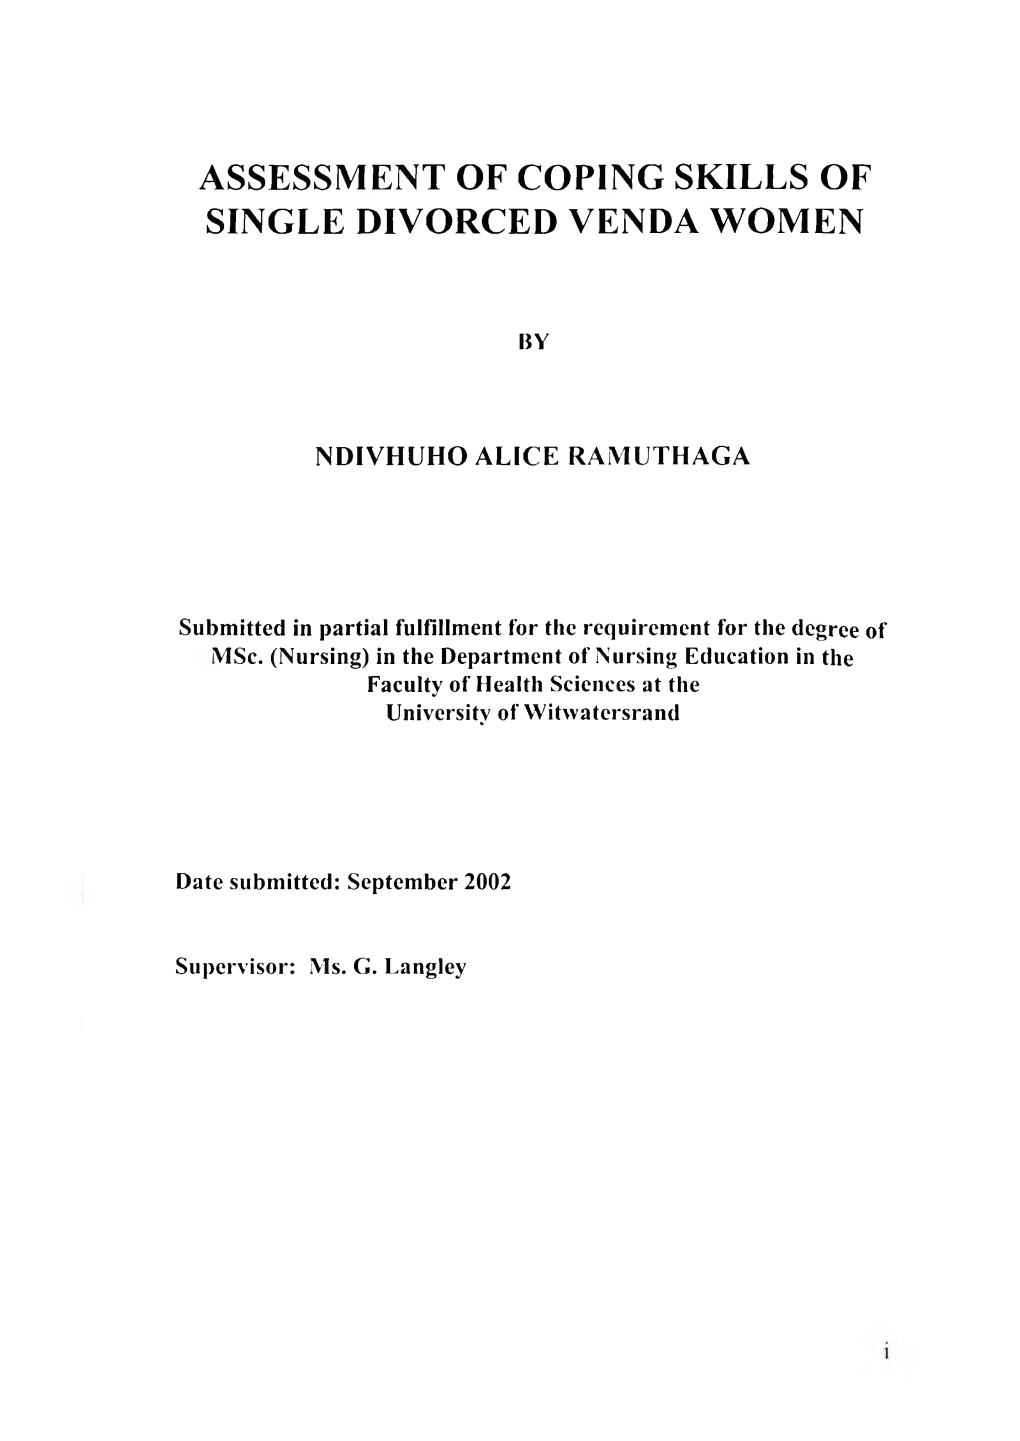 Assessment of Coping Skills of Single Divorced Venda Women